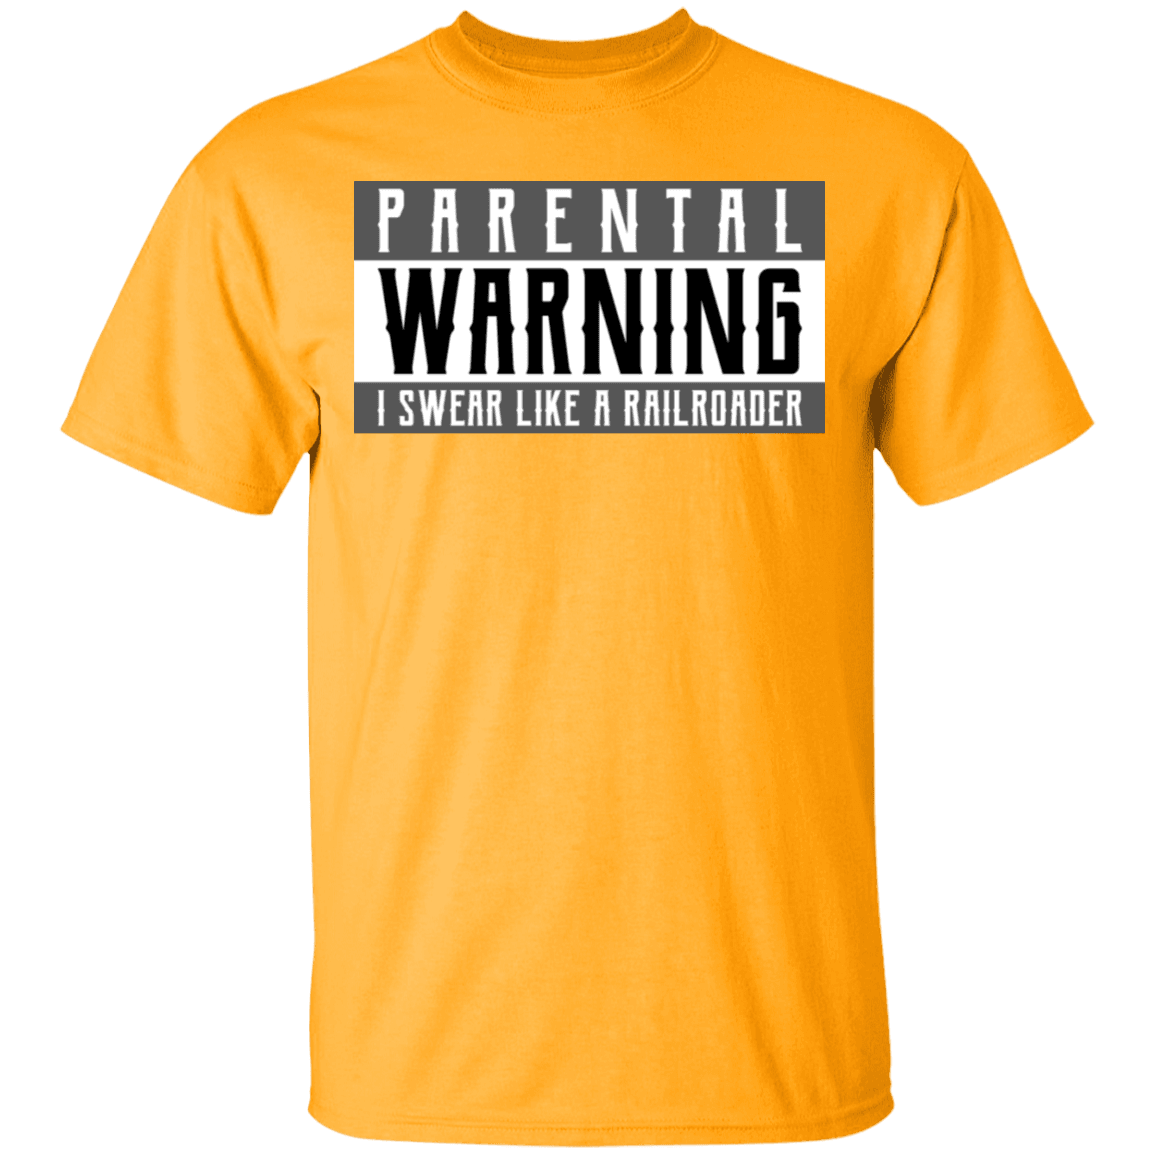 Parental Warning I Swear Like a Railroader Men's Graphic T-Shirt - Broken Knuckle Apparel